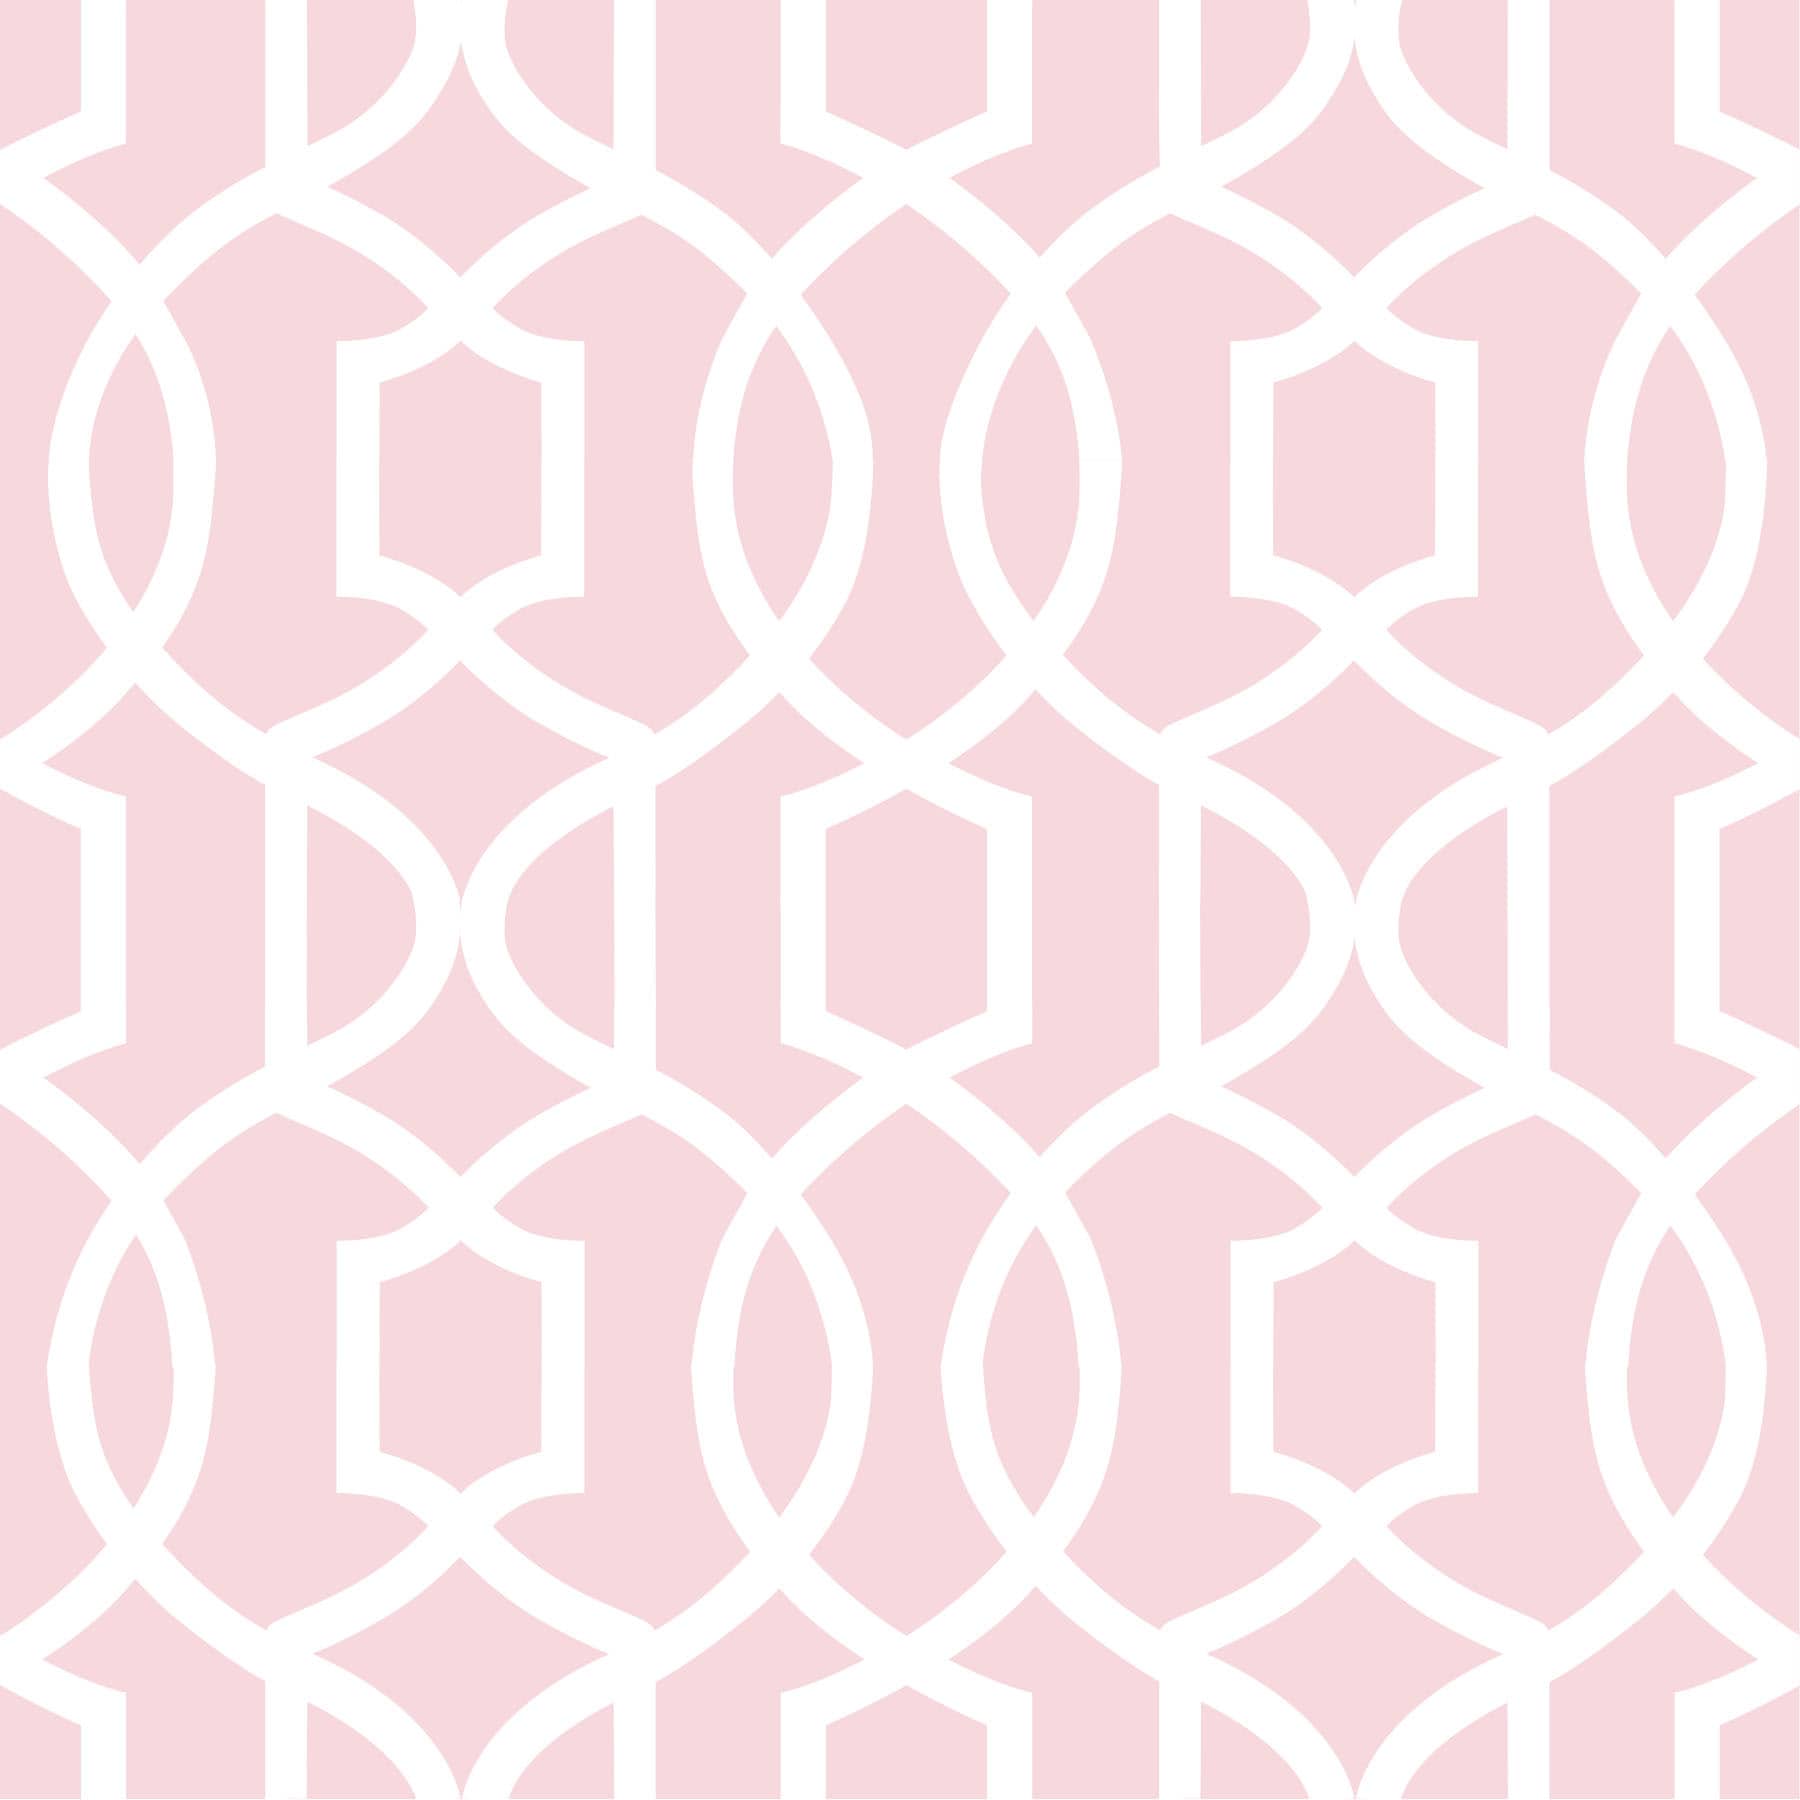 Pink Square Geometric Shapes 4K 5K HD Geometric Wallpapers  HD Wallpapers   ID 67292